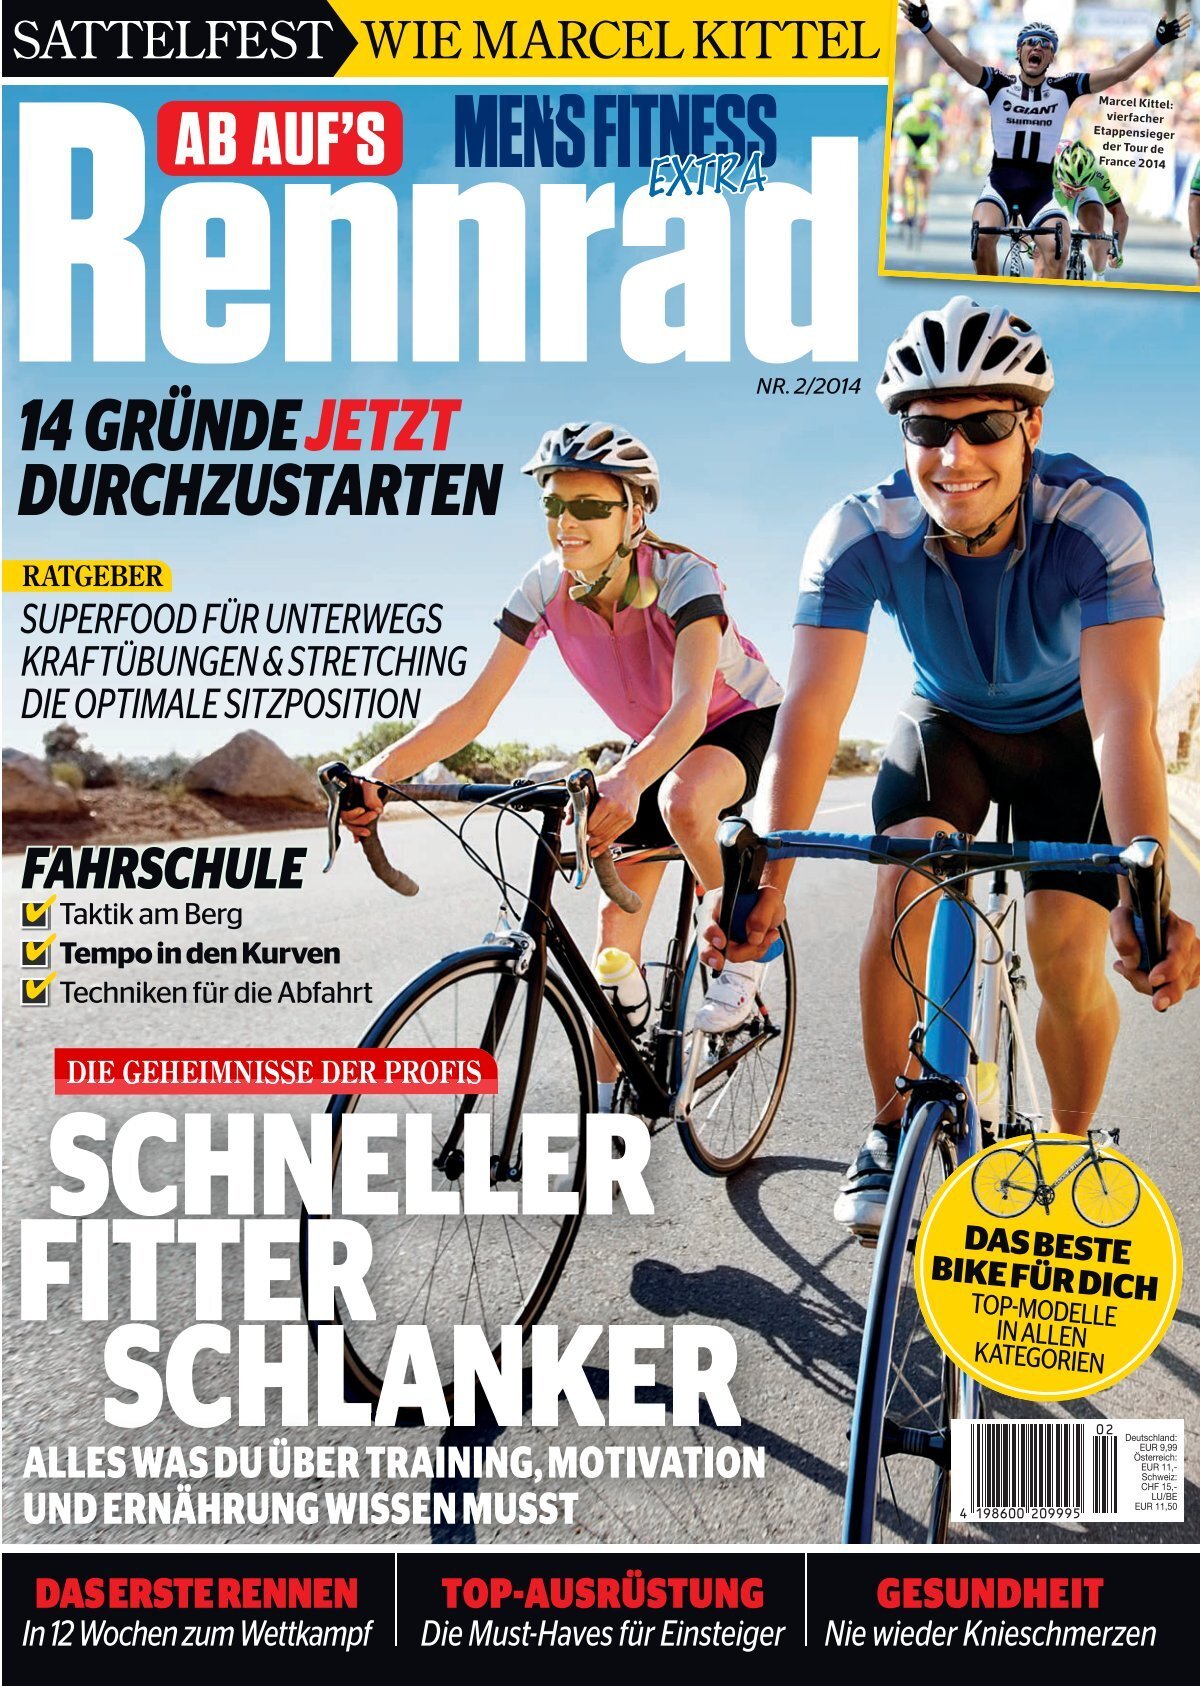 Fahrradpedale wechseln » MHW Bike Magazin